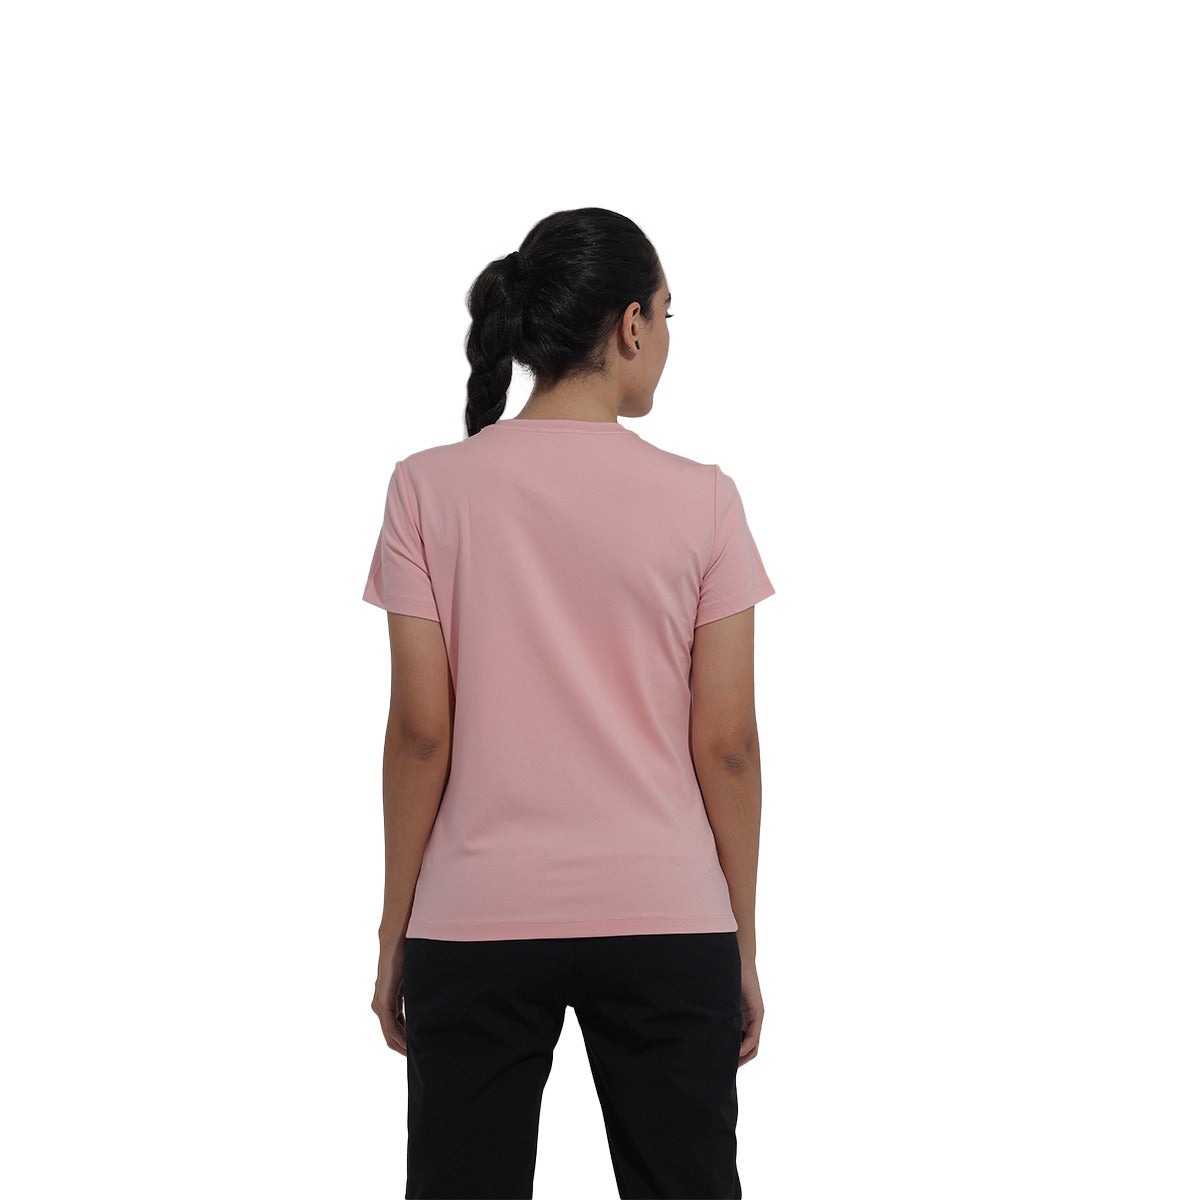 Anta SS Tee Cross Training T-Shirt For Women, Pink White